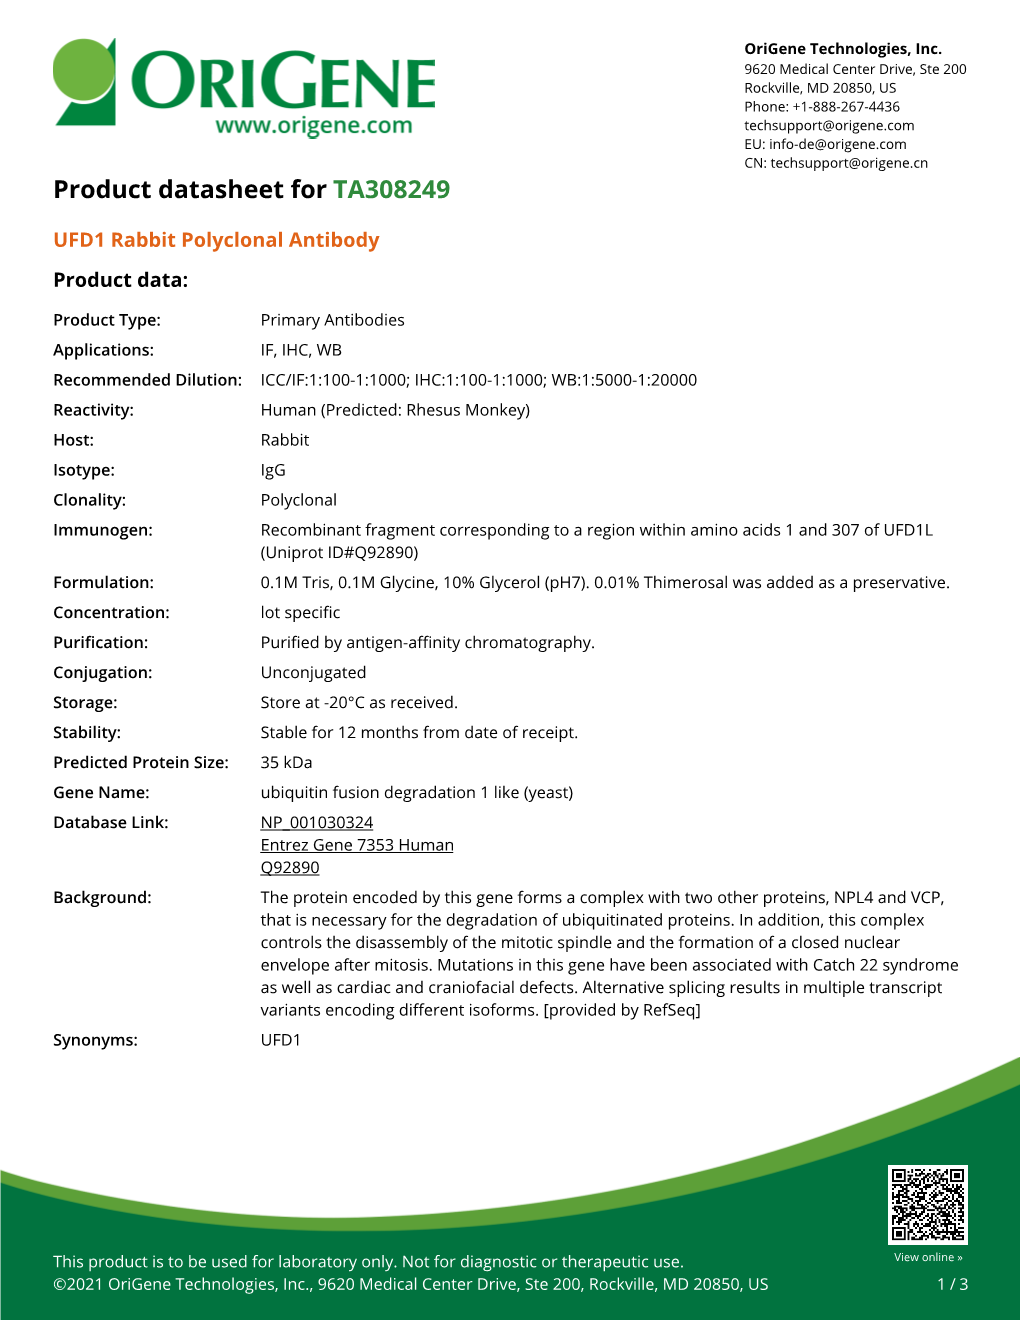 UFD1 Rabbit Polyclonal Antibody – TA308249 | Origene